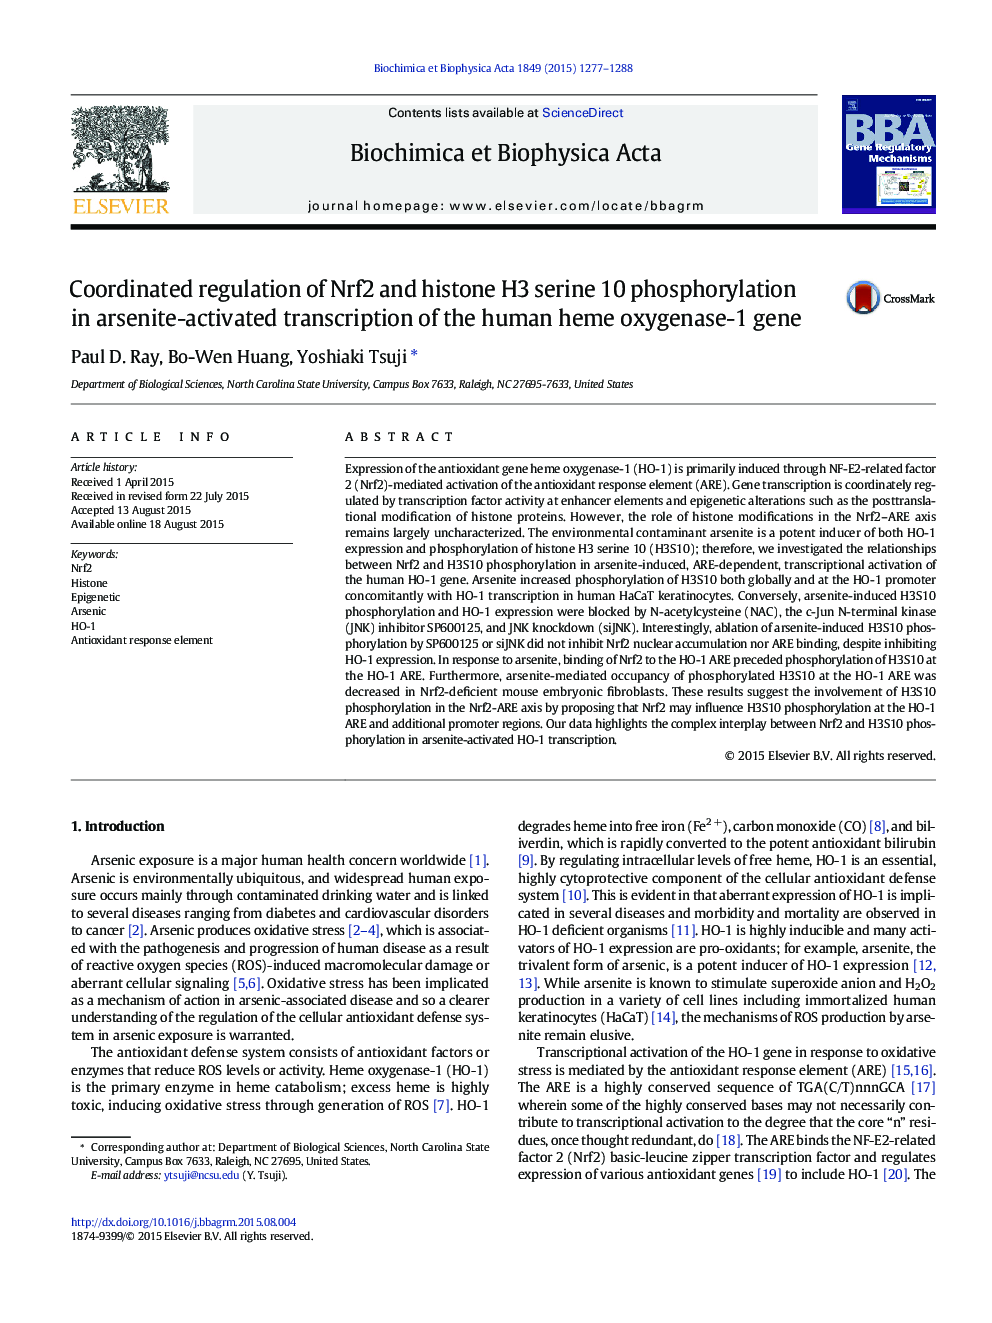 Coordinated regulation of Nrf2 and histone H3 serine 10 phosphorylation in arsenite-activated transcription of the human heme oxygenase-1 gene